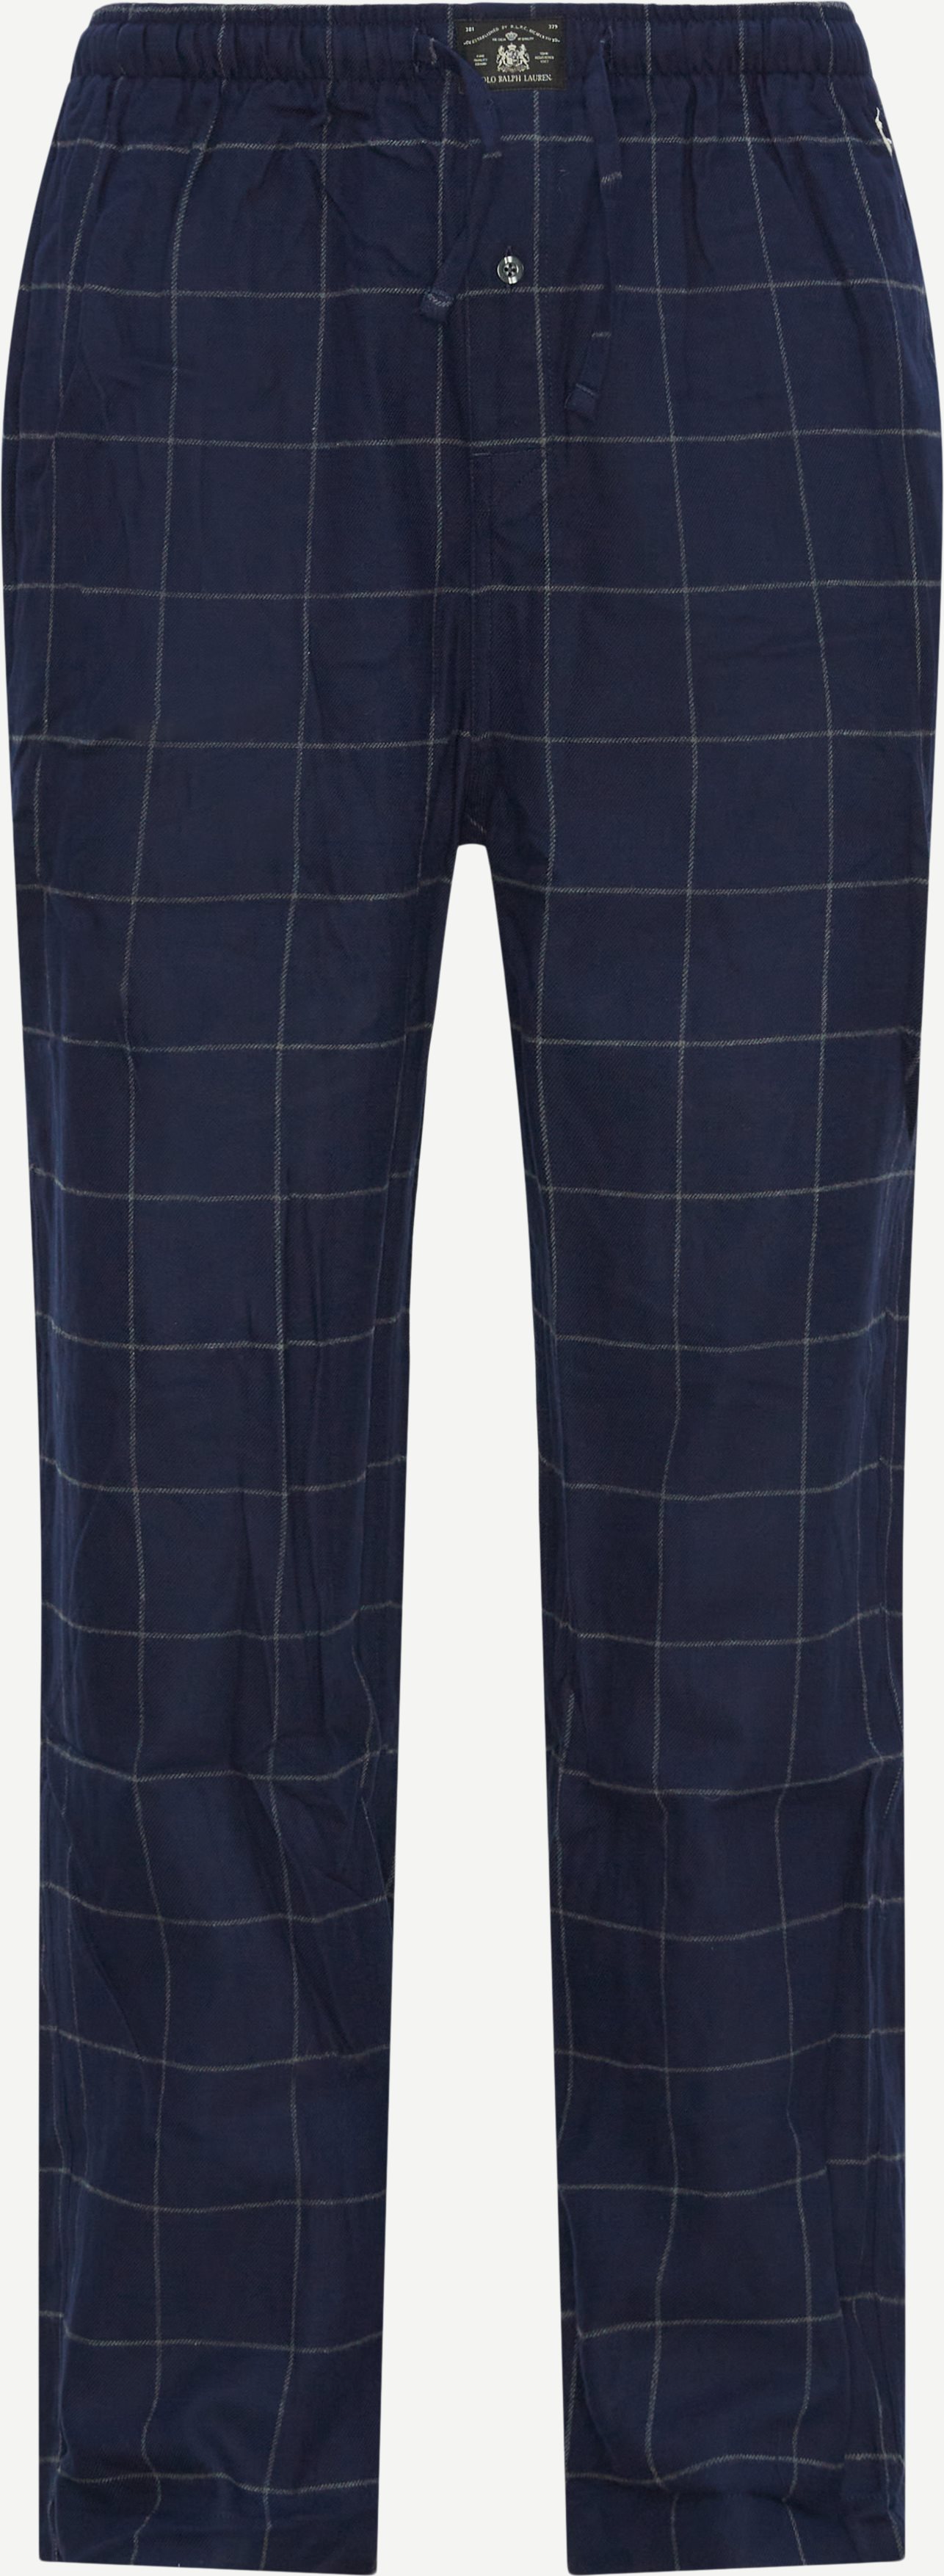 Polo Ralph Lauren Underwear 714754037 PJ PANT Blue